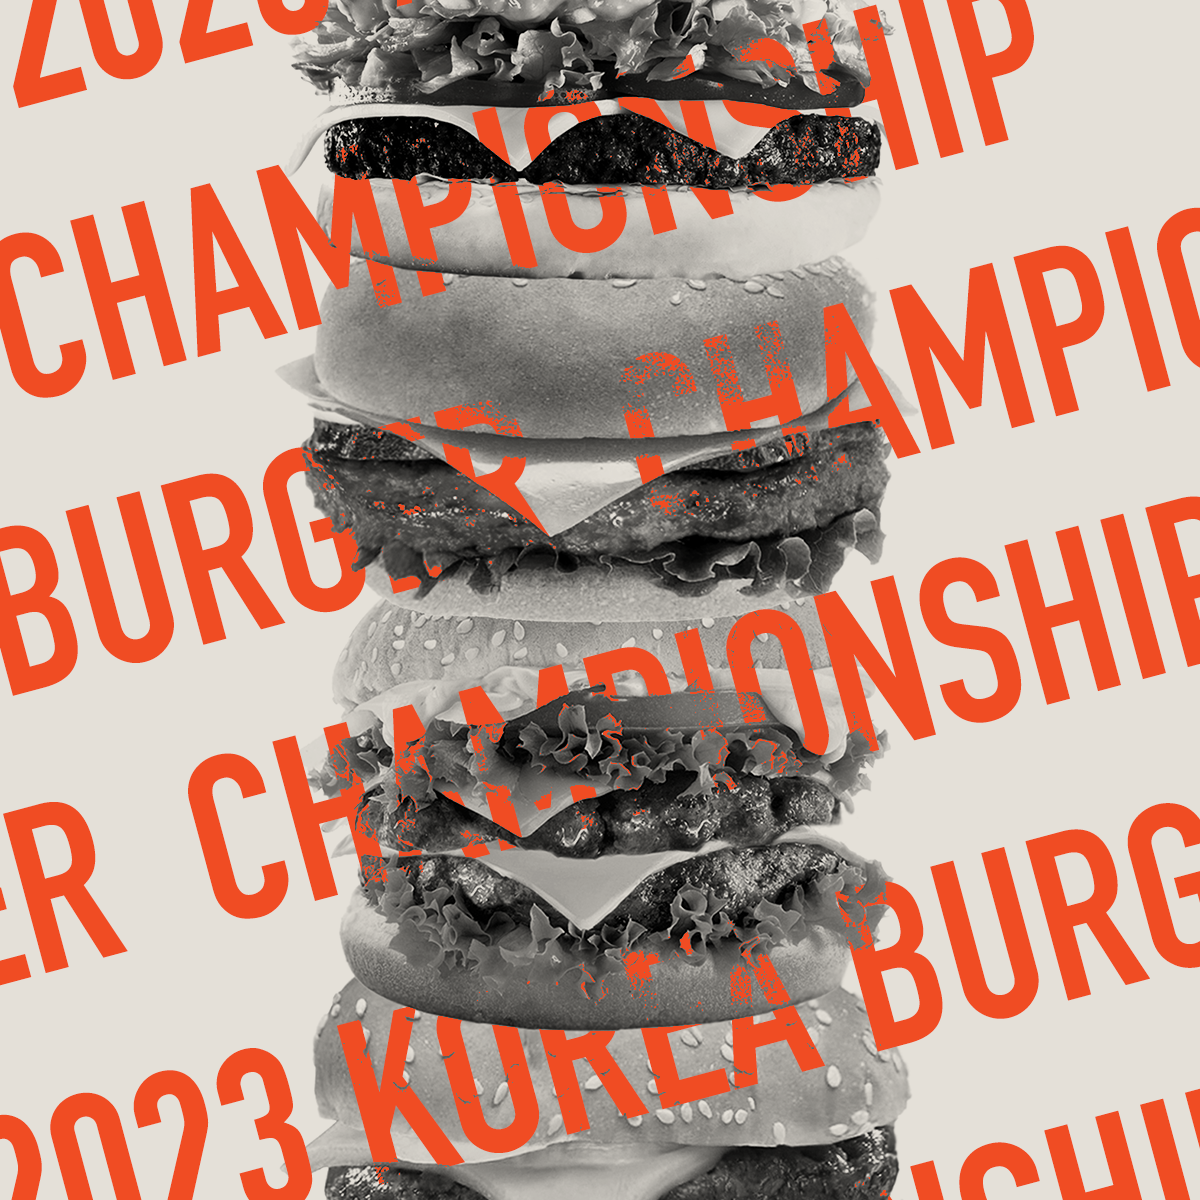 ؍̃no[K[No.1肷uKorea Burger Championship 2023v7/22`23ɊJÁI